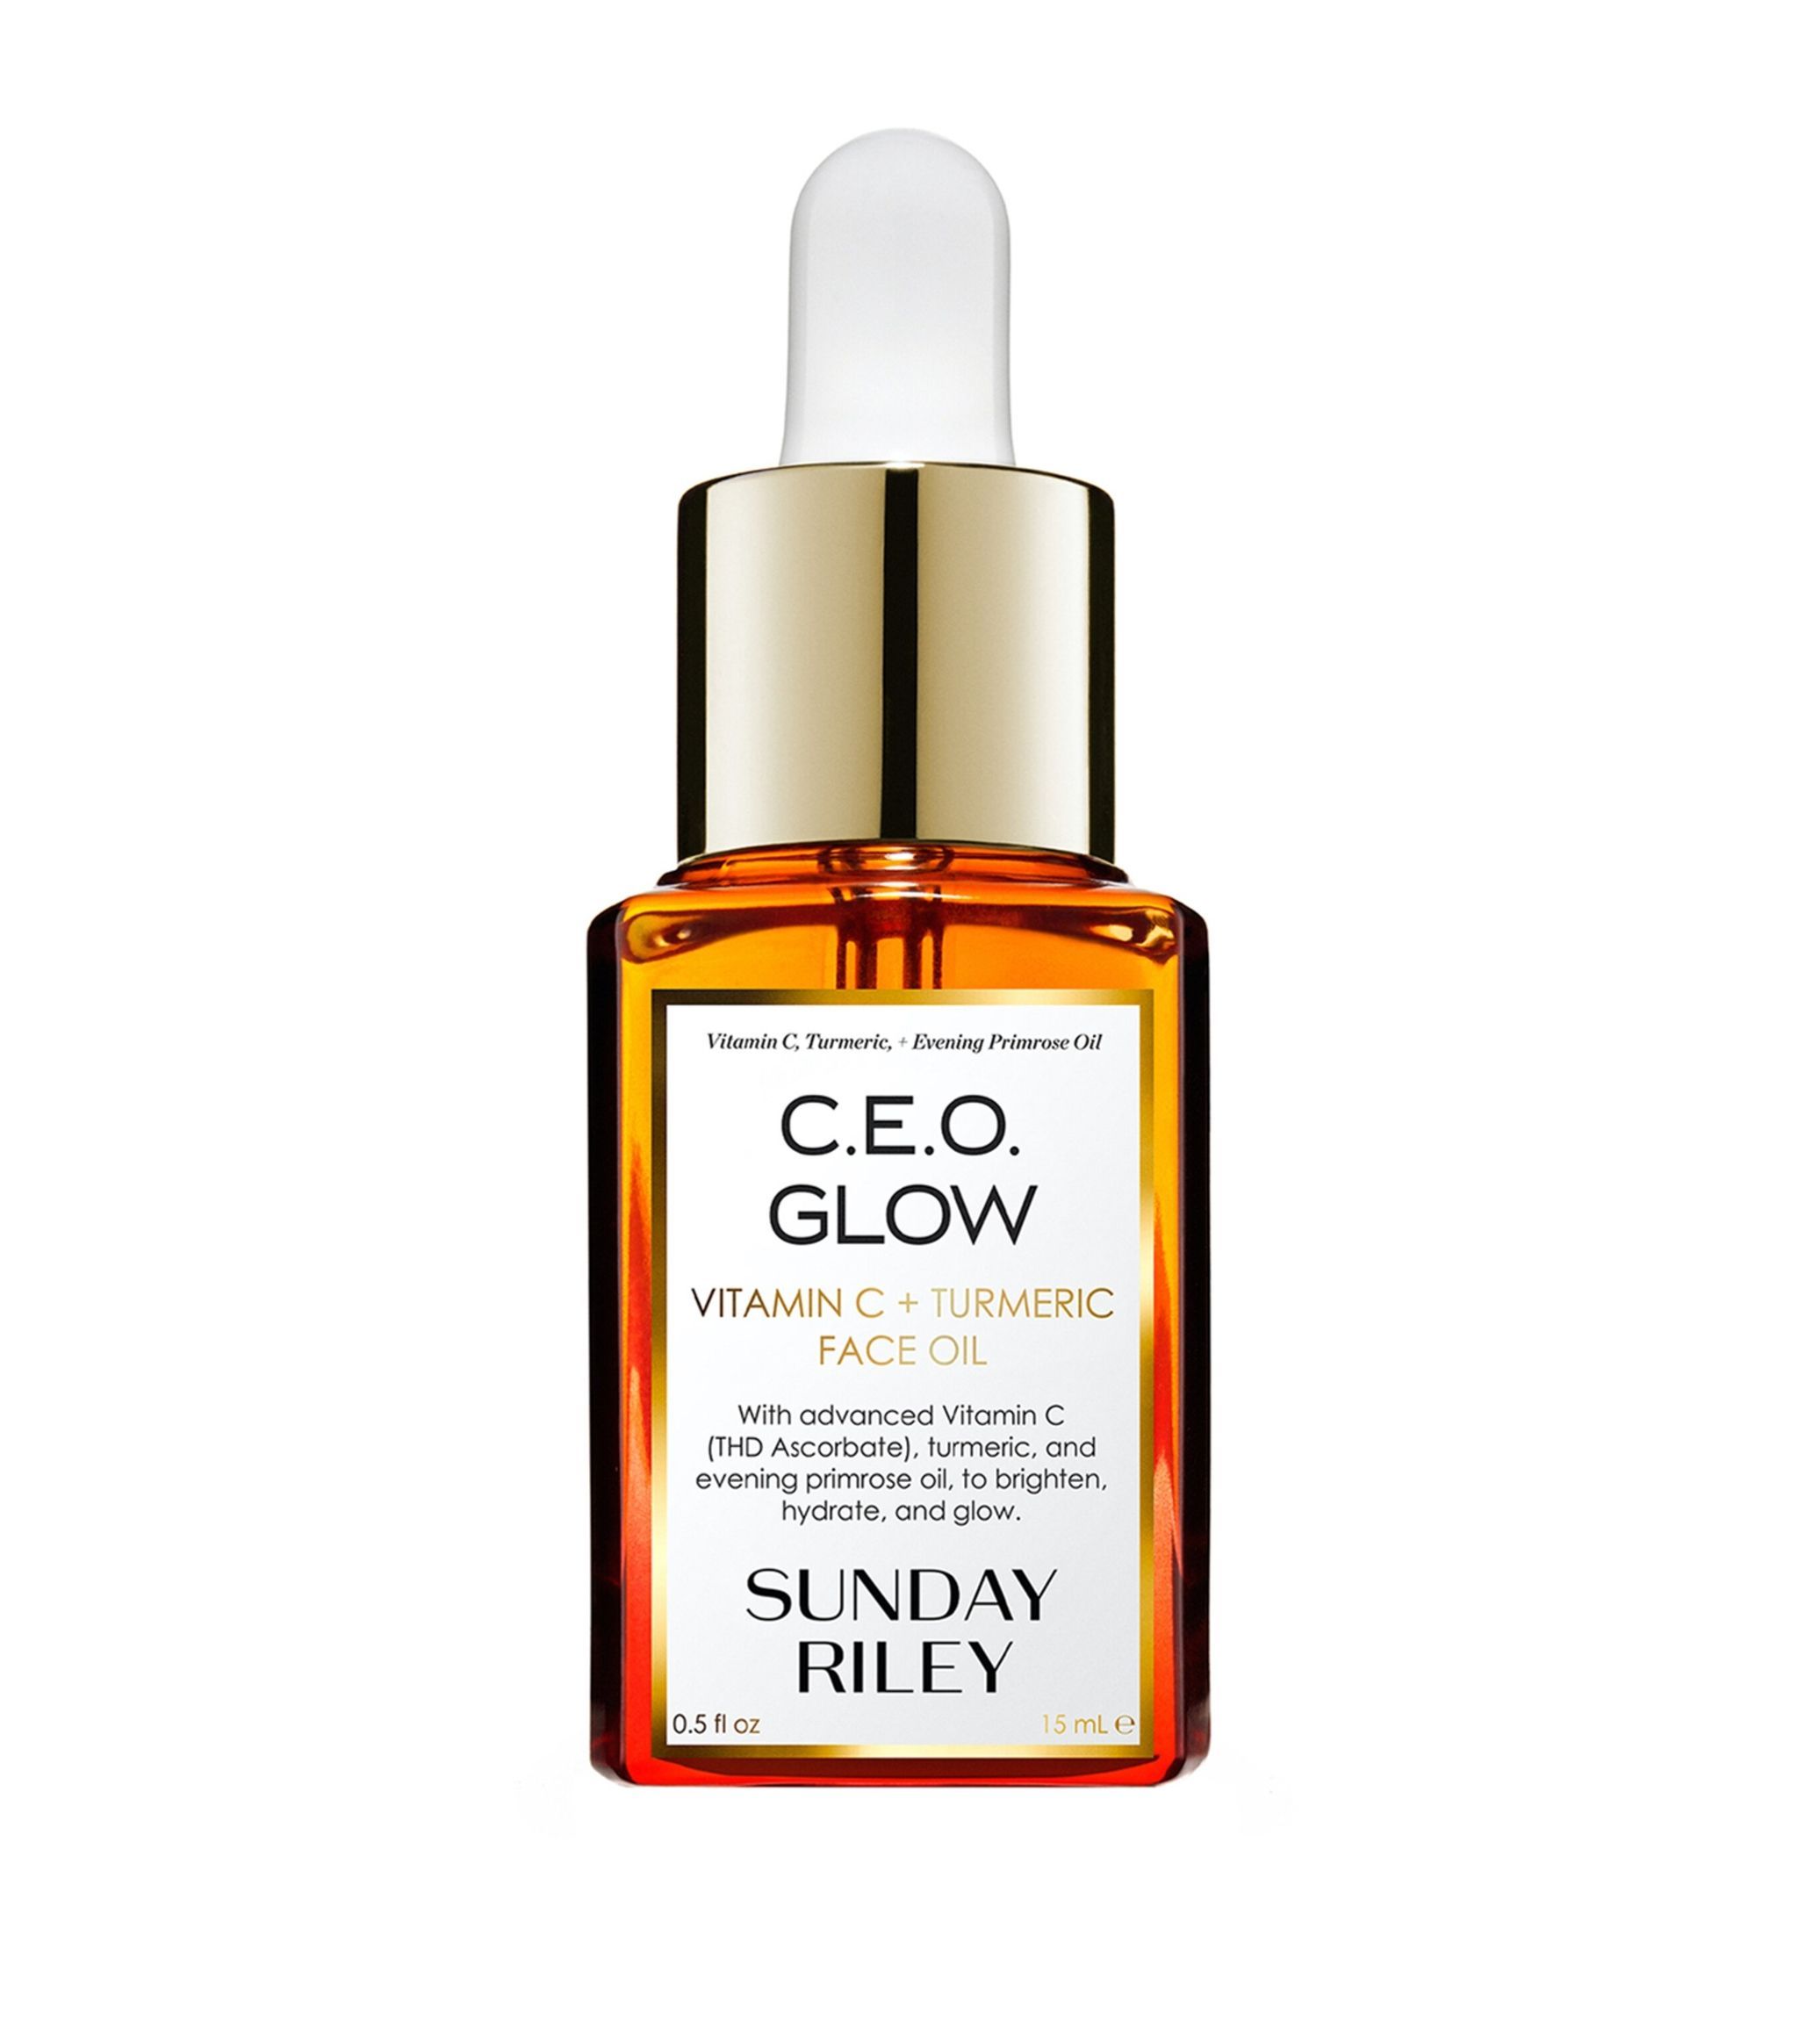 C.E.O. Glow Vitamin C + Turmeric Face Oil (15ml) | Harrods